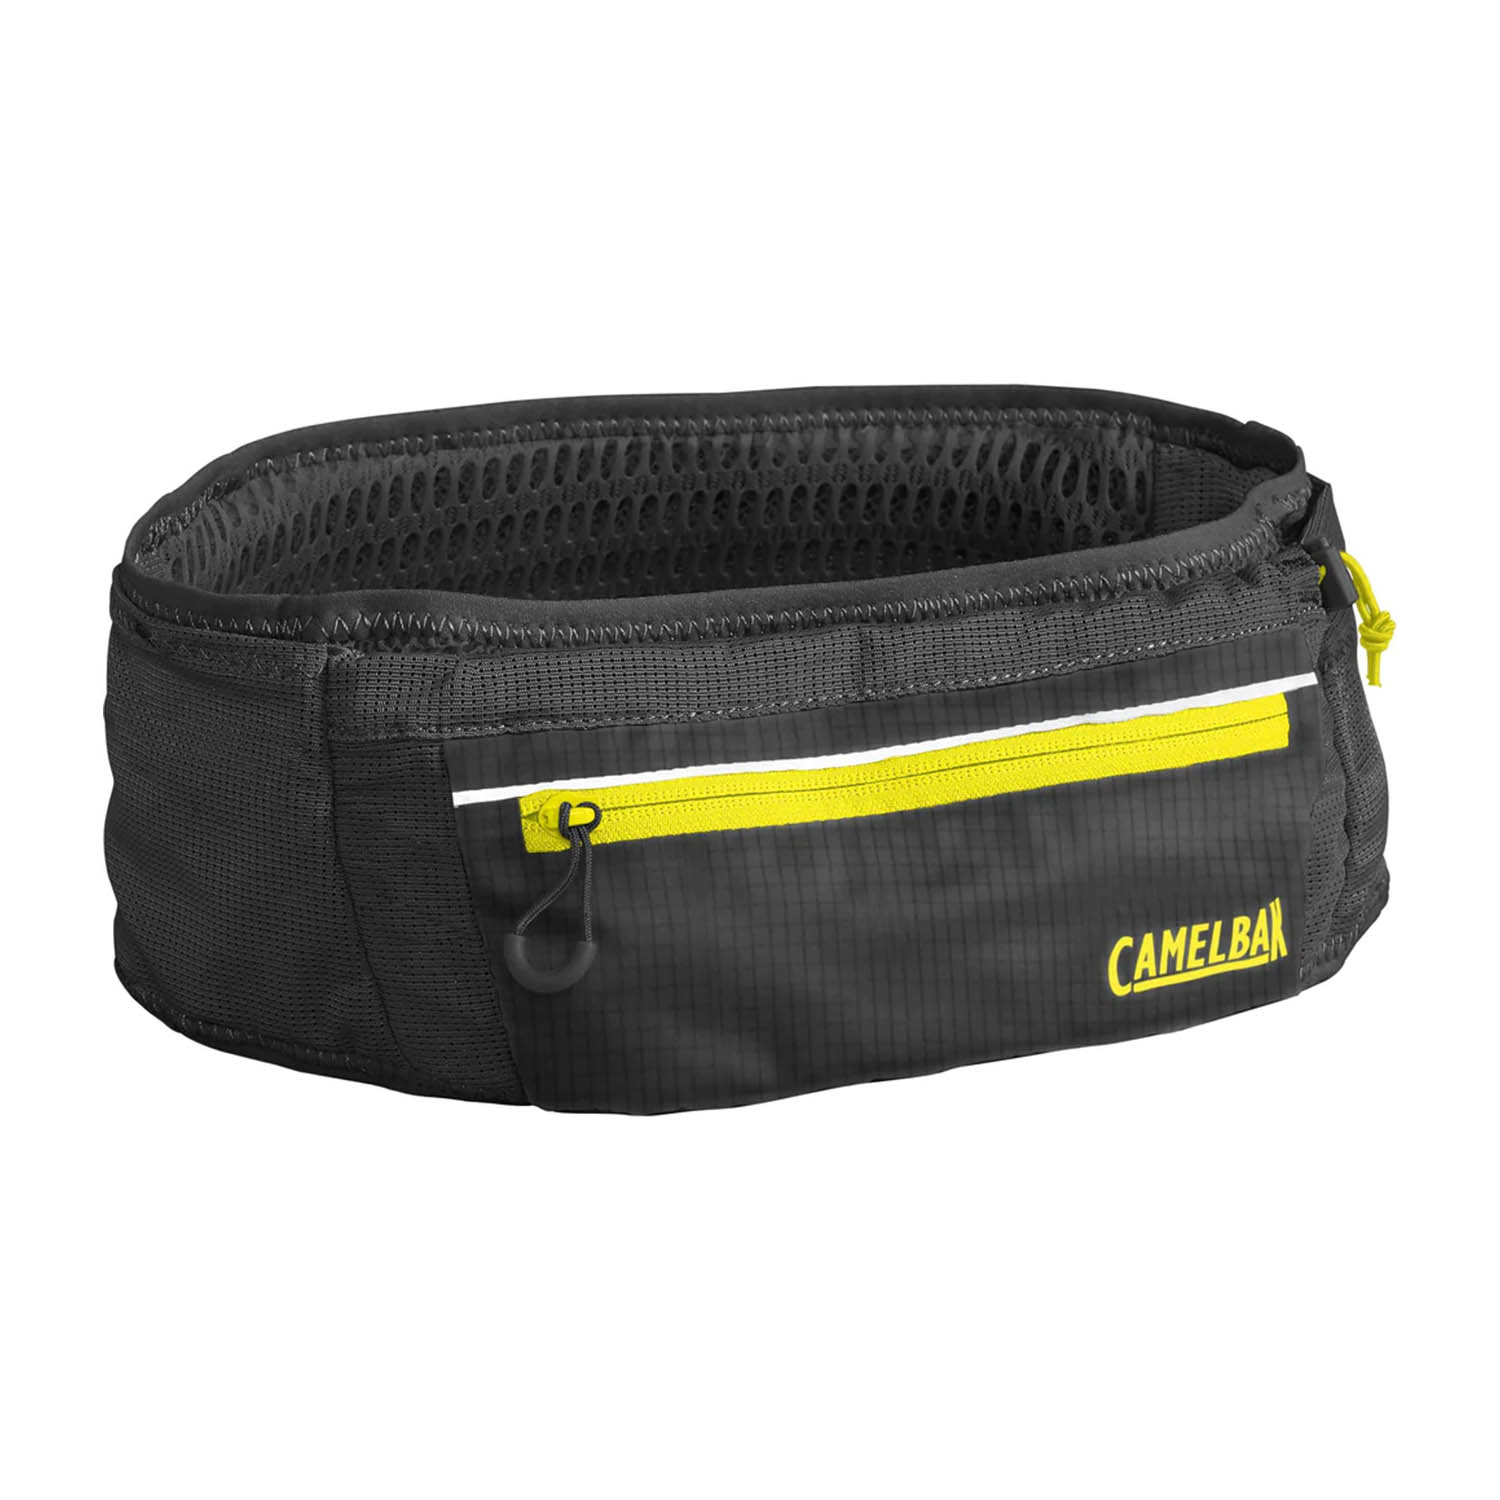 Camelbak Ultra Belt - Black/Safety Yellow